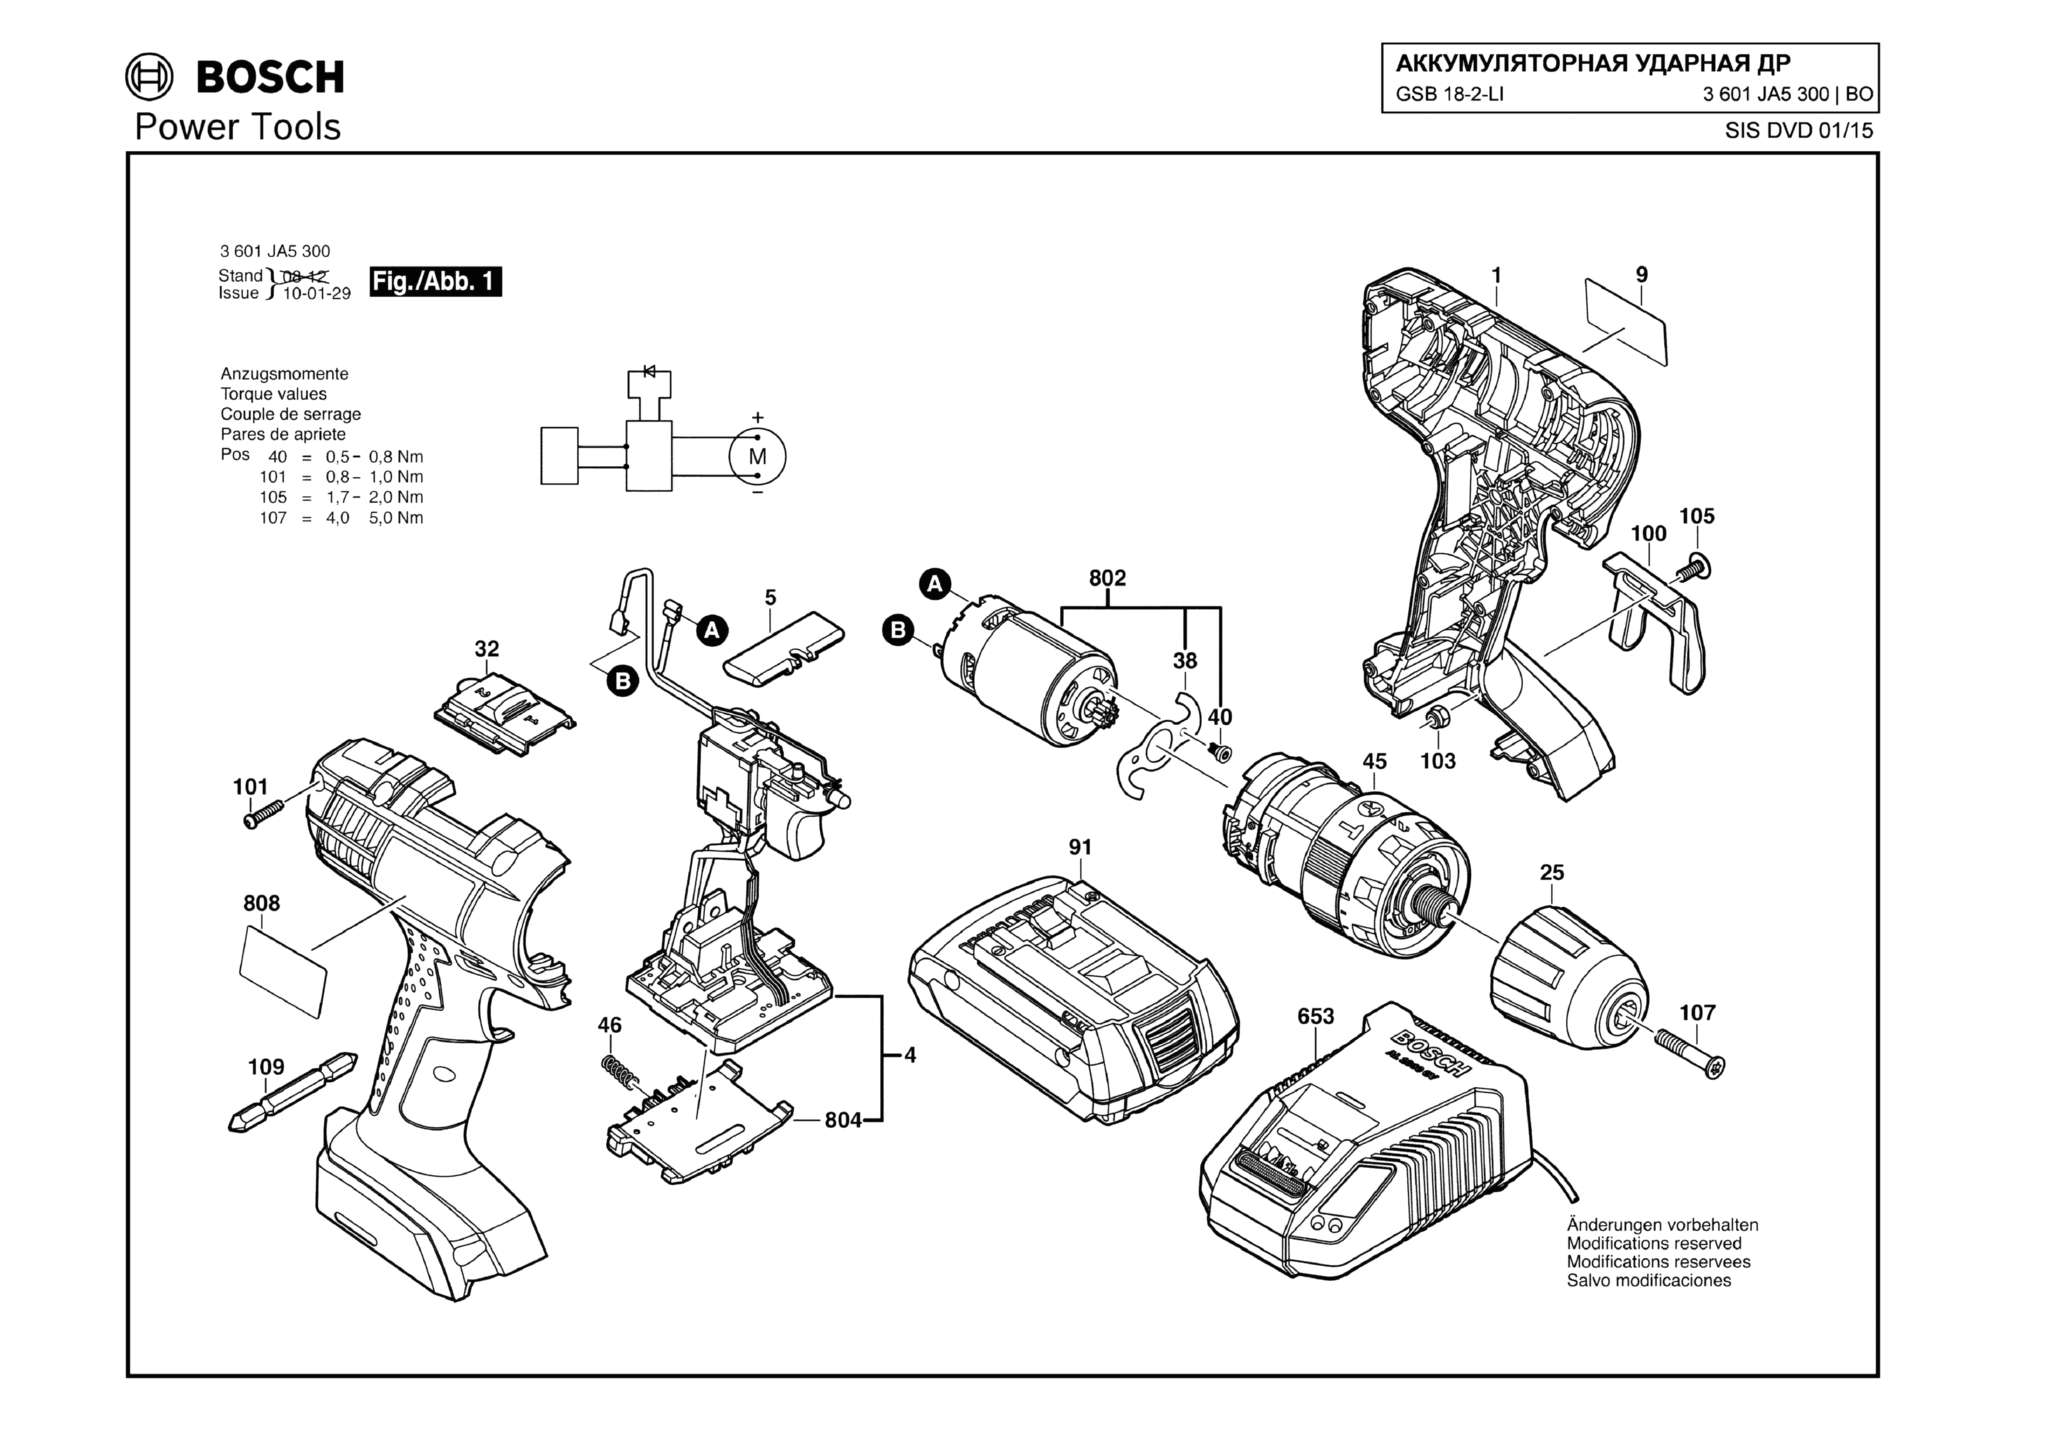 Запчасти, схема и деталировка Bosch GSB 18-2-LI (ТИП 3601JA5300)